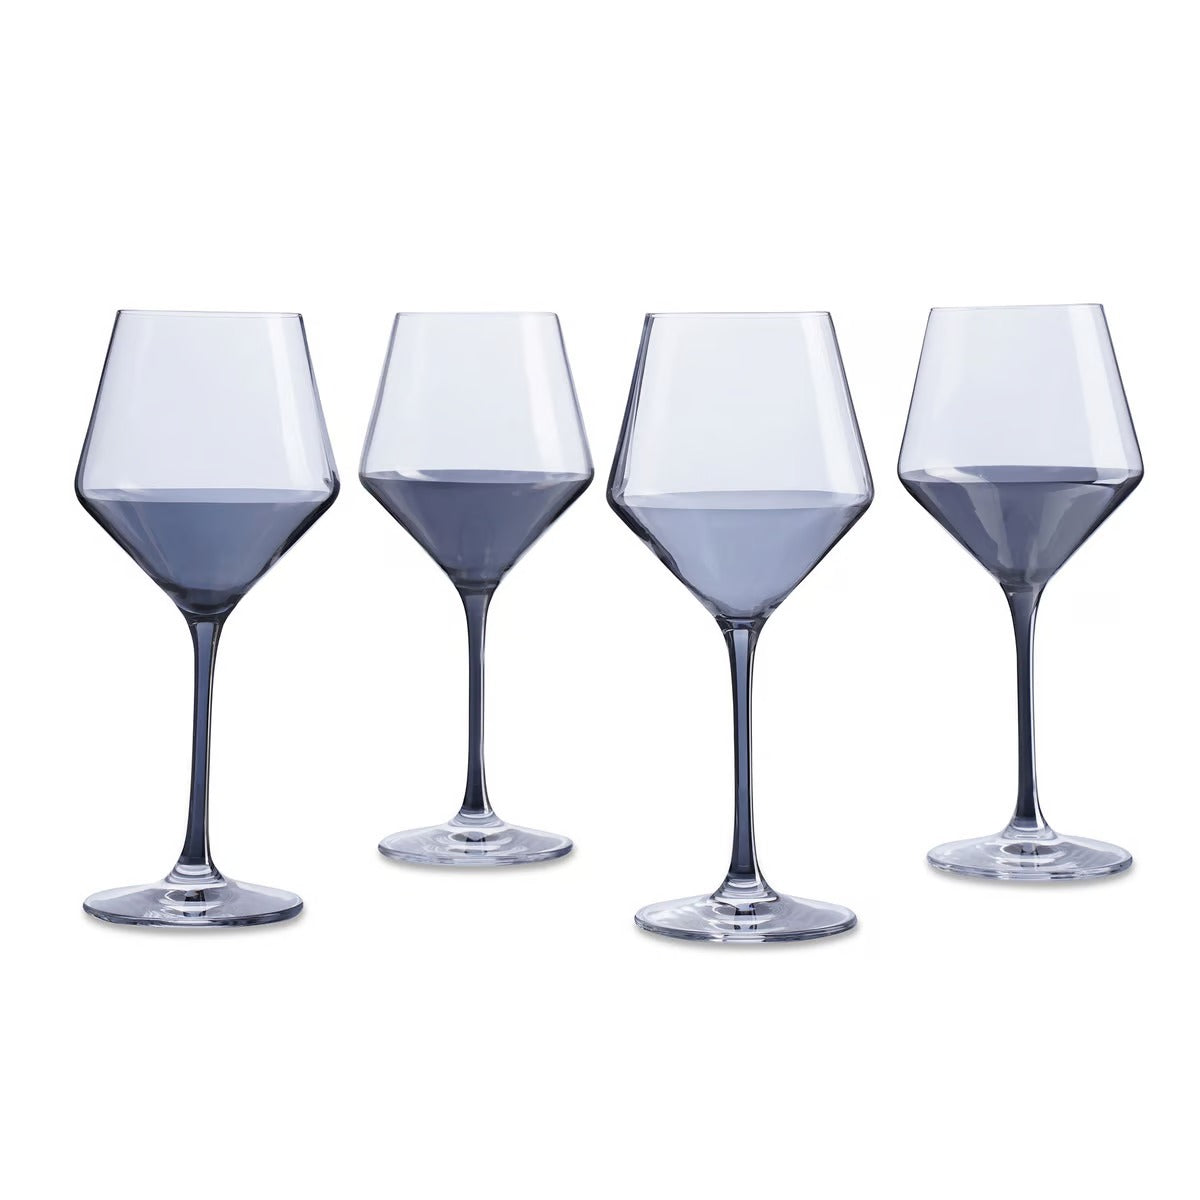 Riona Electroplated 4-piece Stemware Glass Set 460ml - Grey